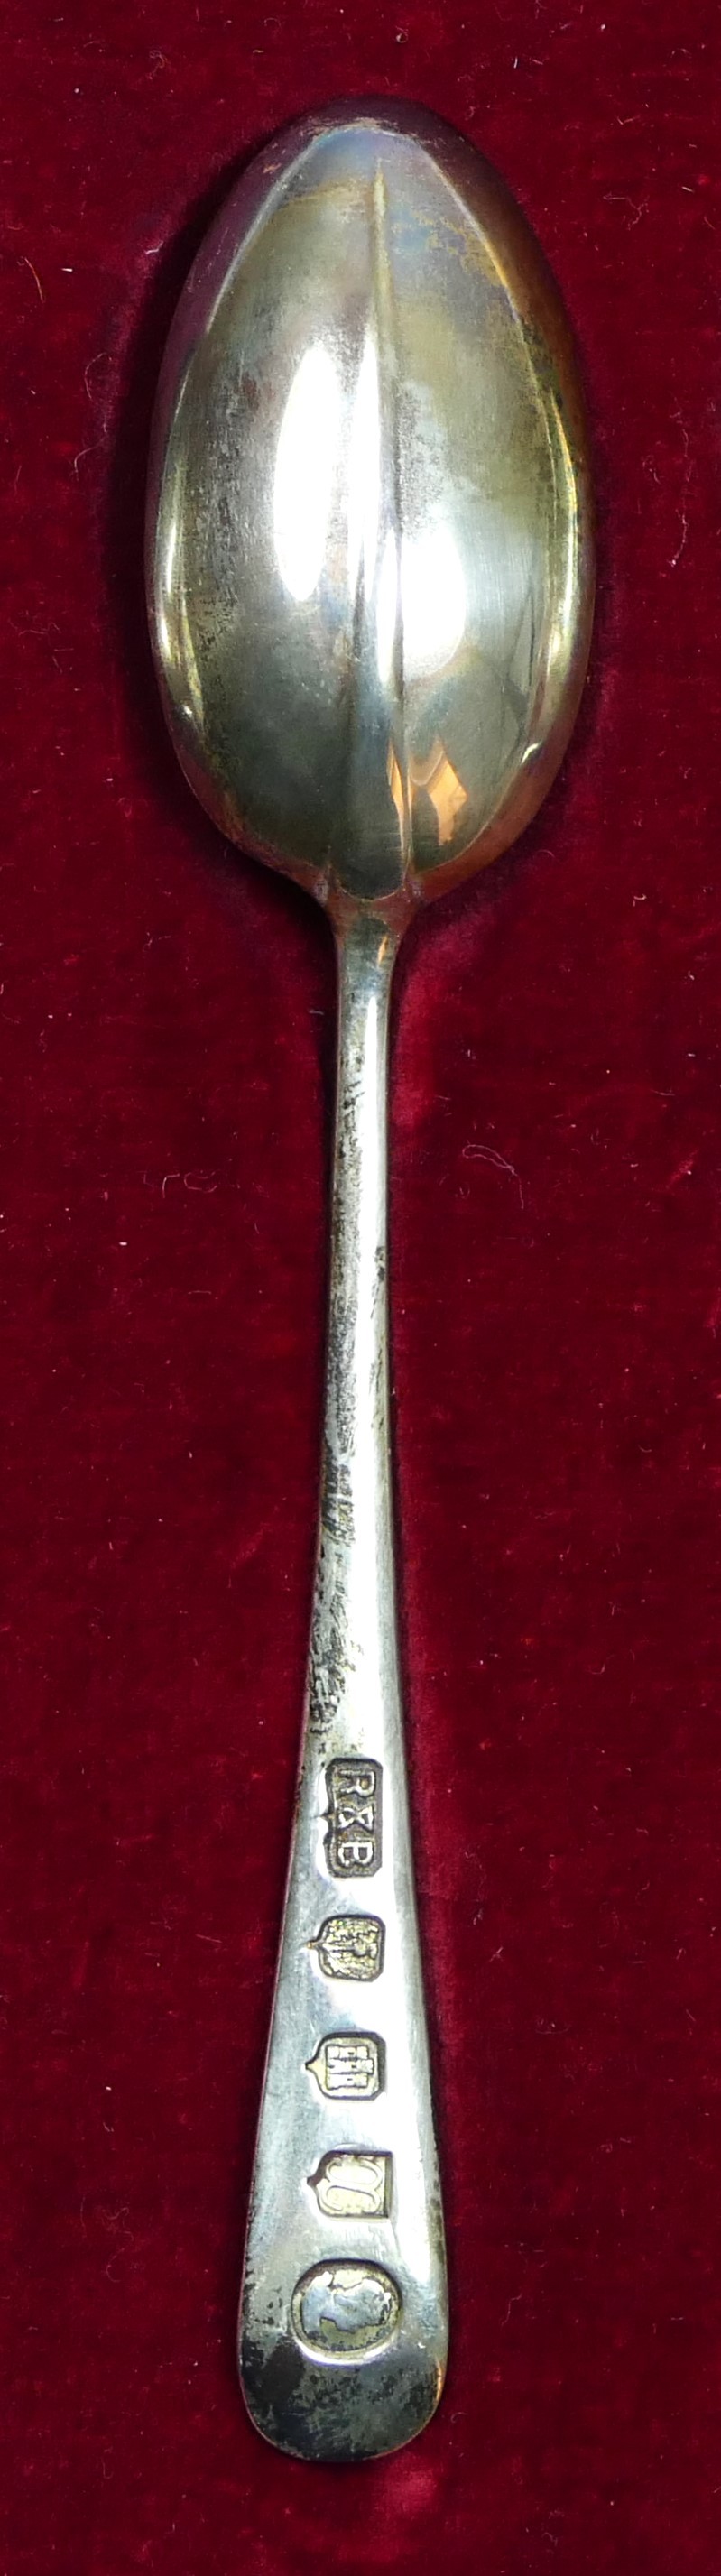 A silver set of British Hallmark tea spoons, 1953, Coronation mark, case - Image 3 of 3